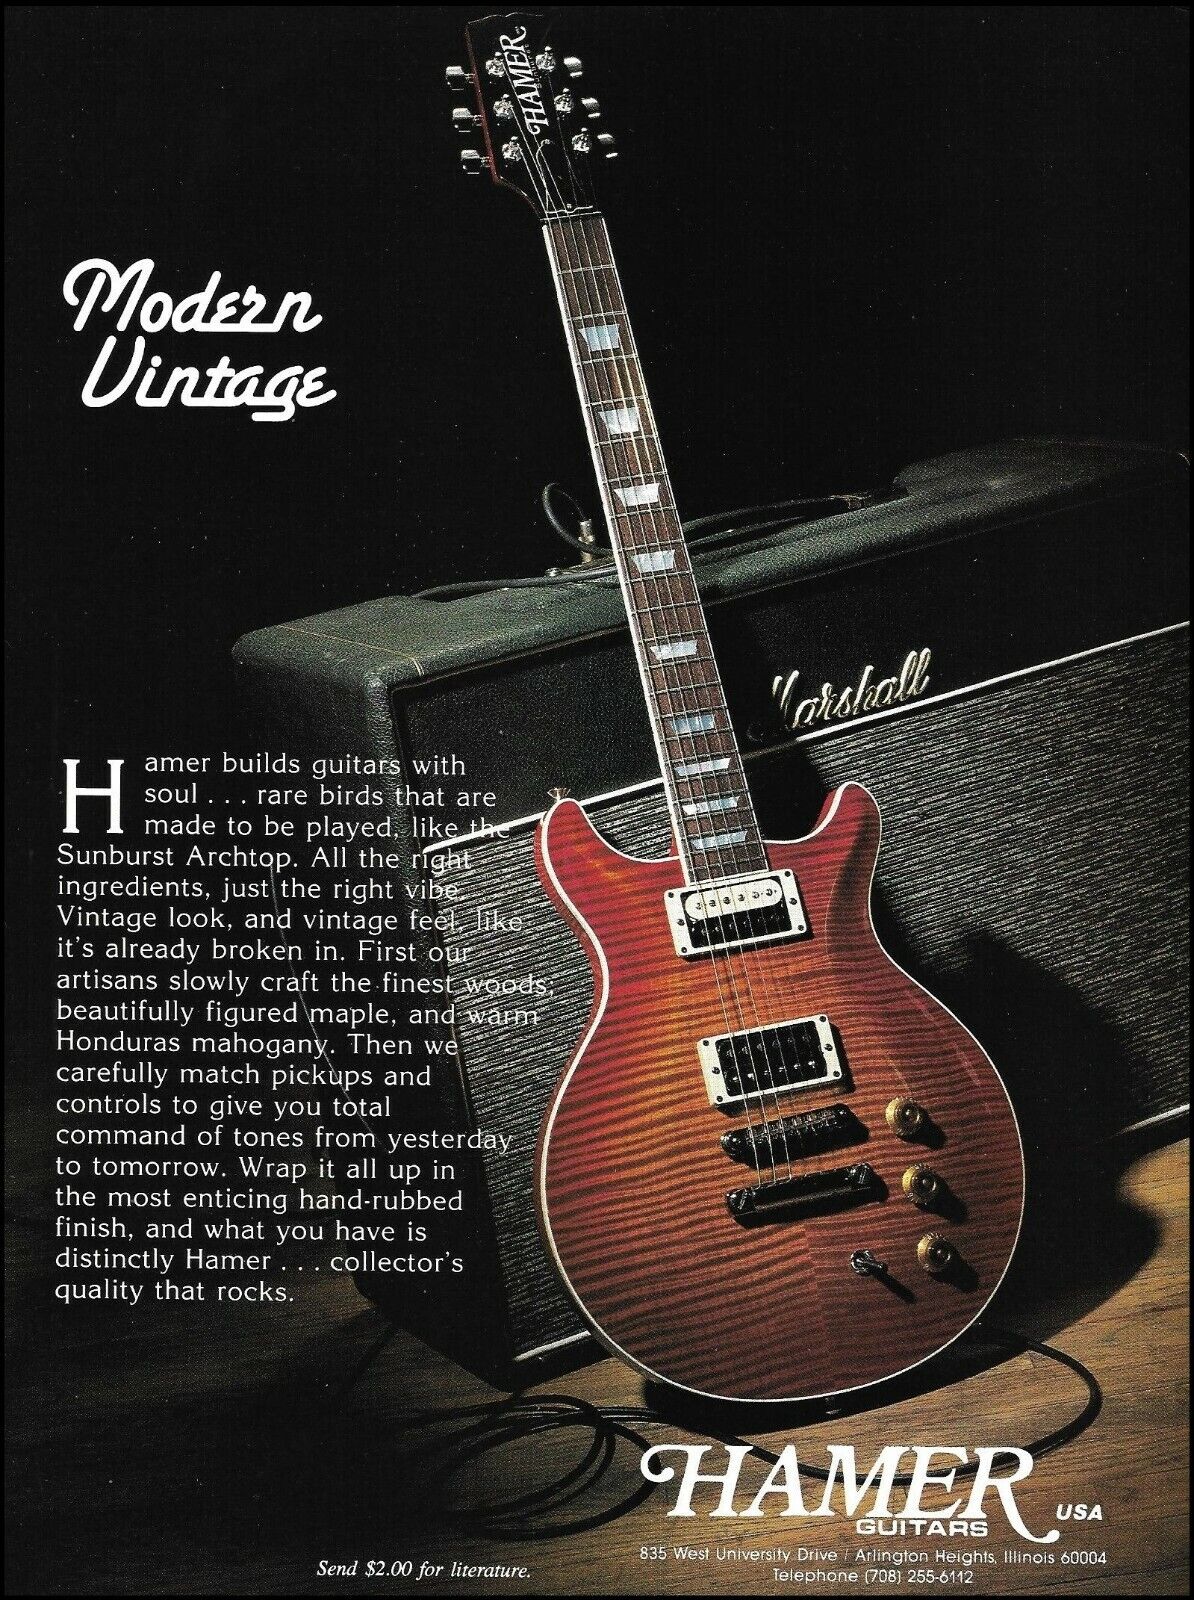 Hamer 1992 Modern Vintage Series Sunburst Archtop Guitar advertisement 8 x 11 ad